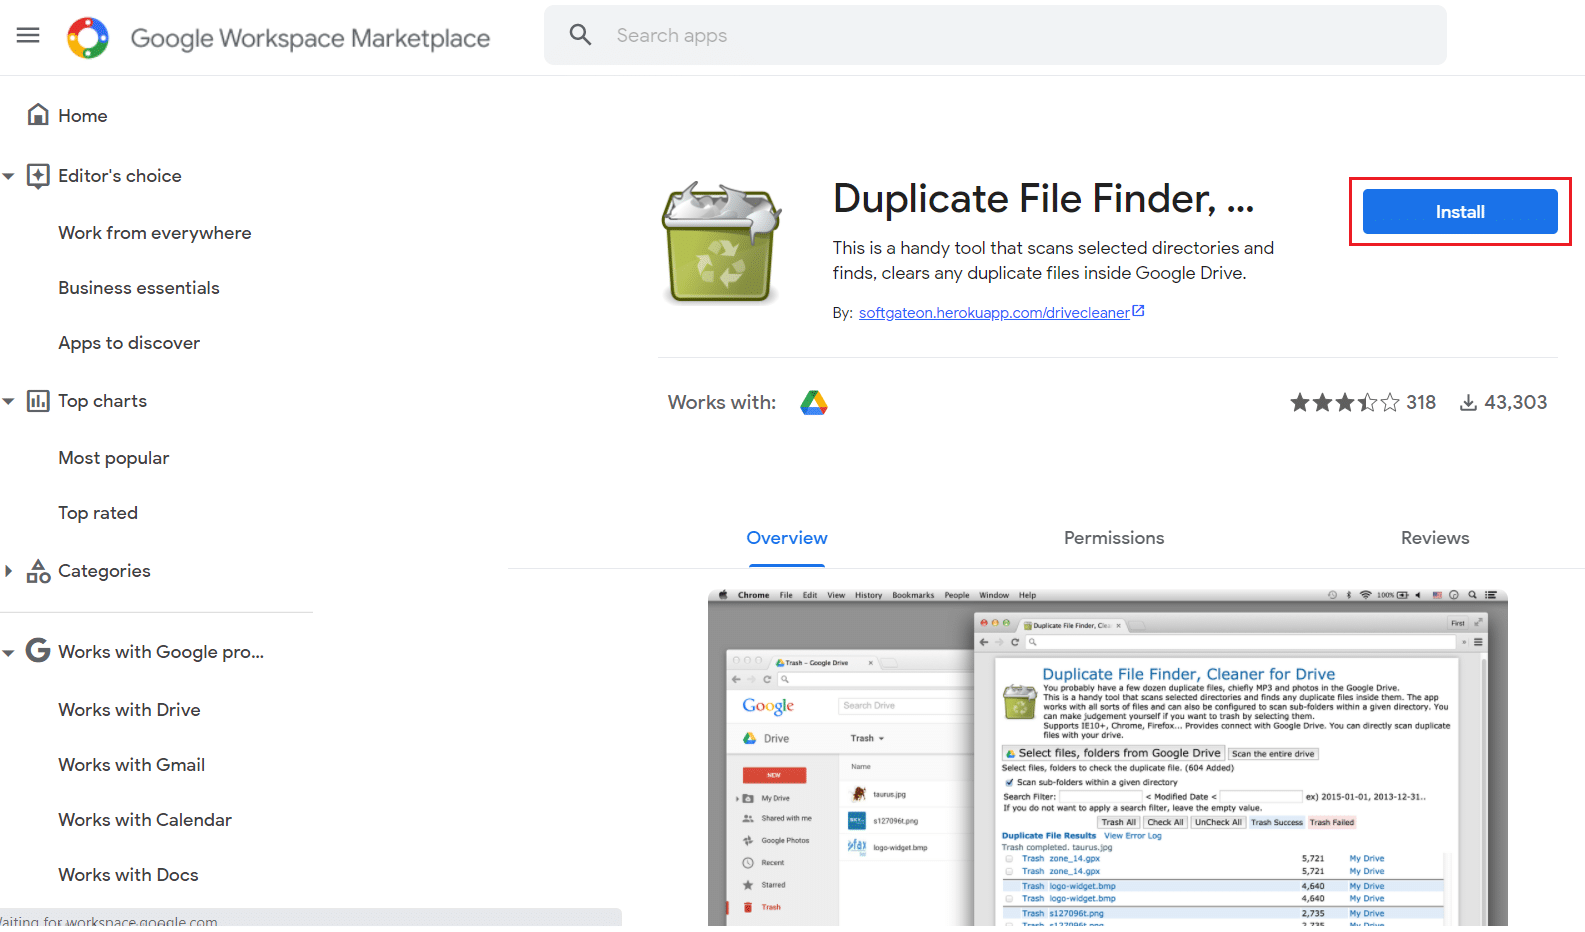 duplicate files finder google workspace marketplace app